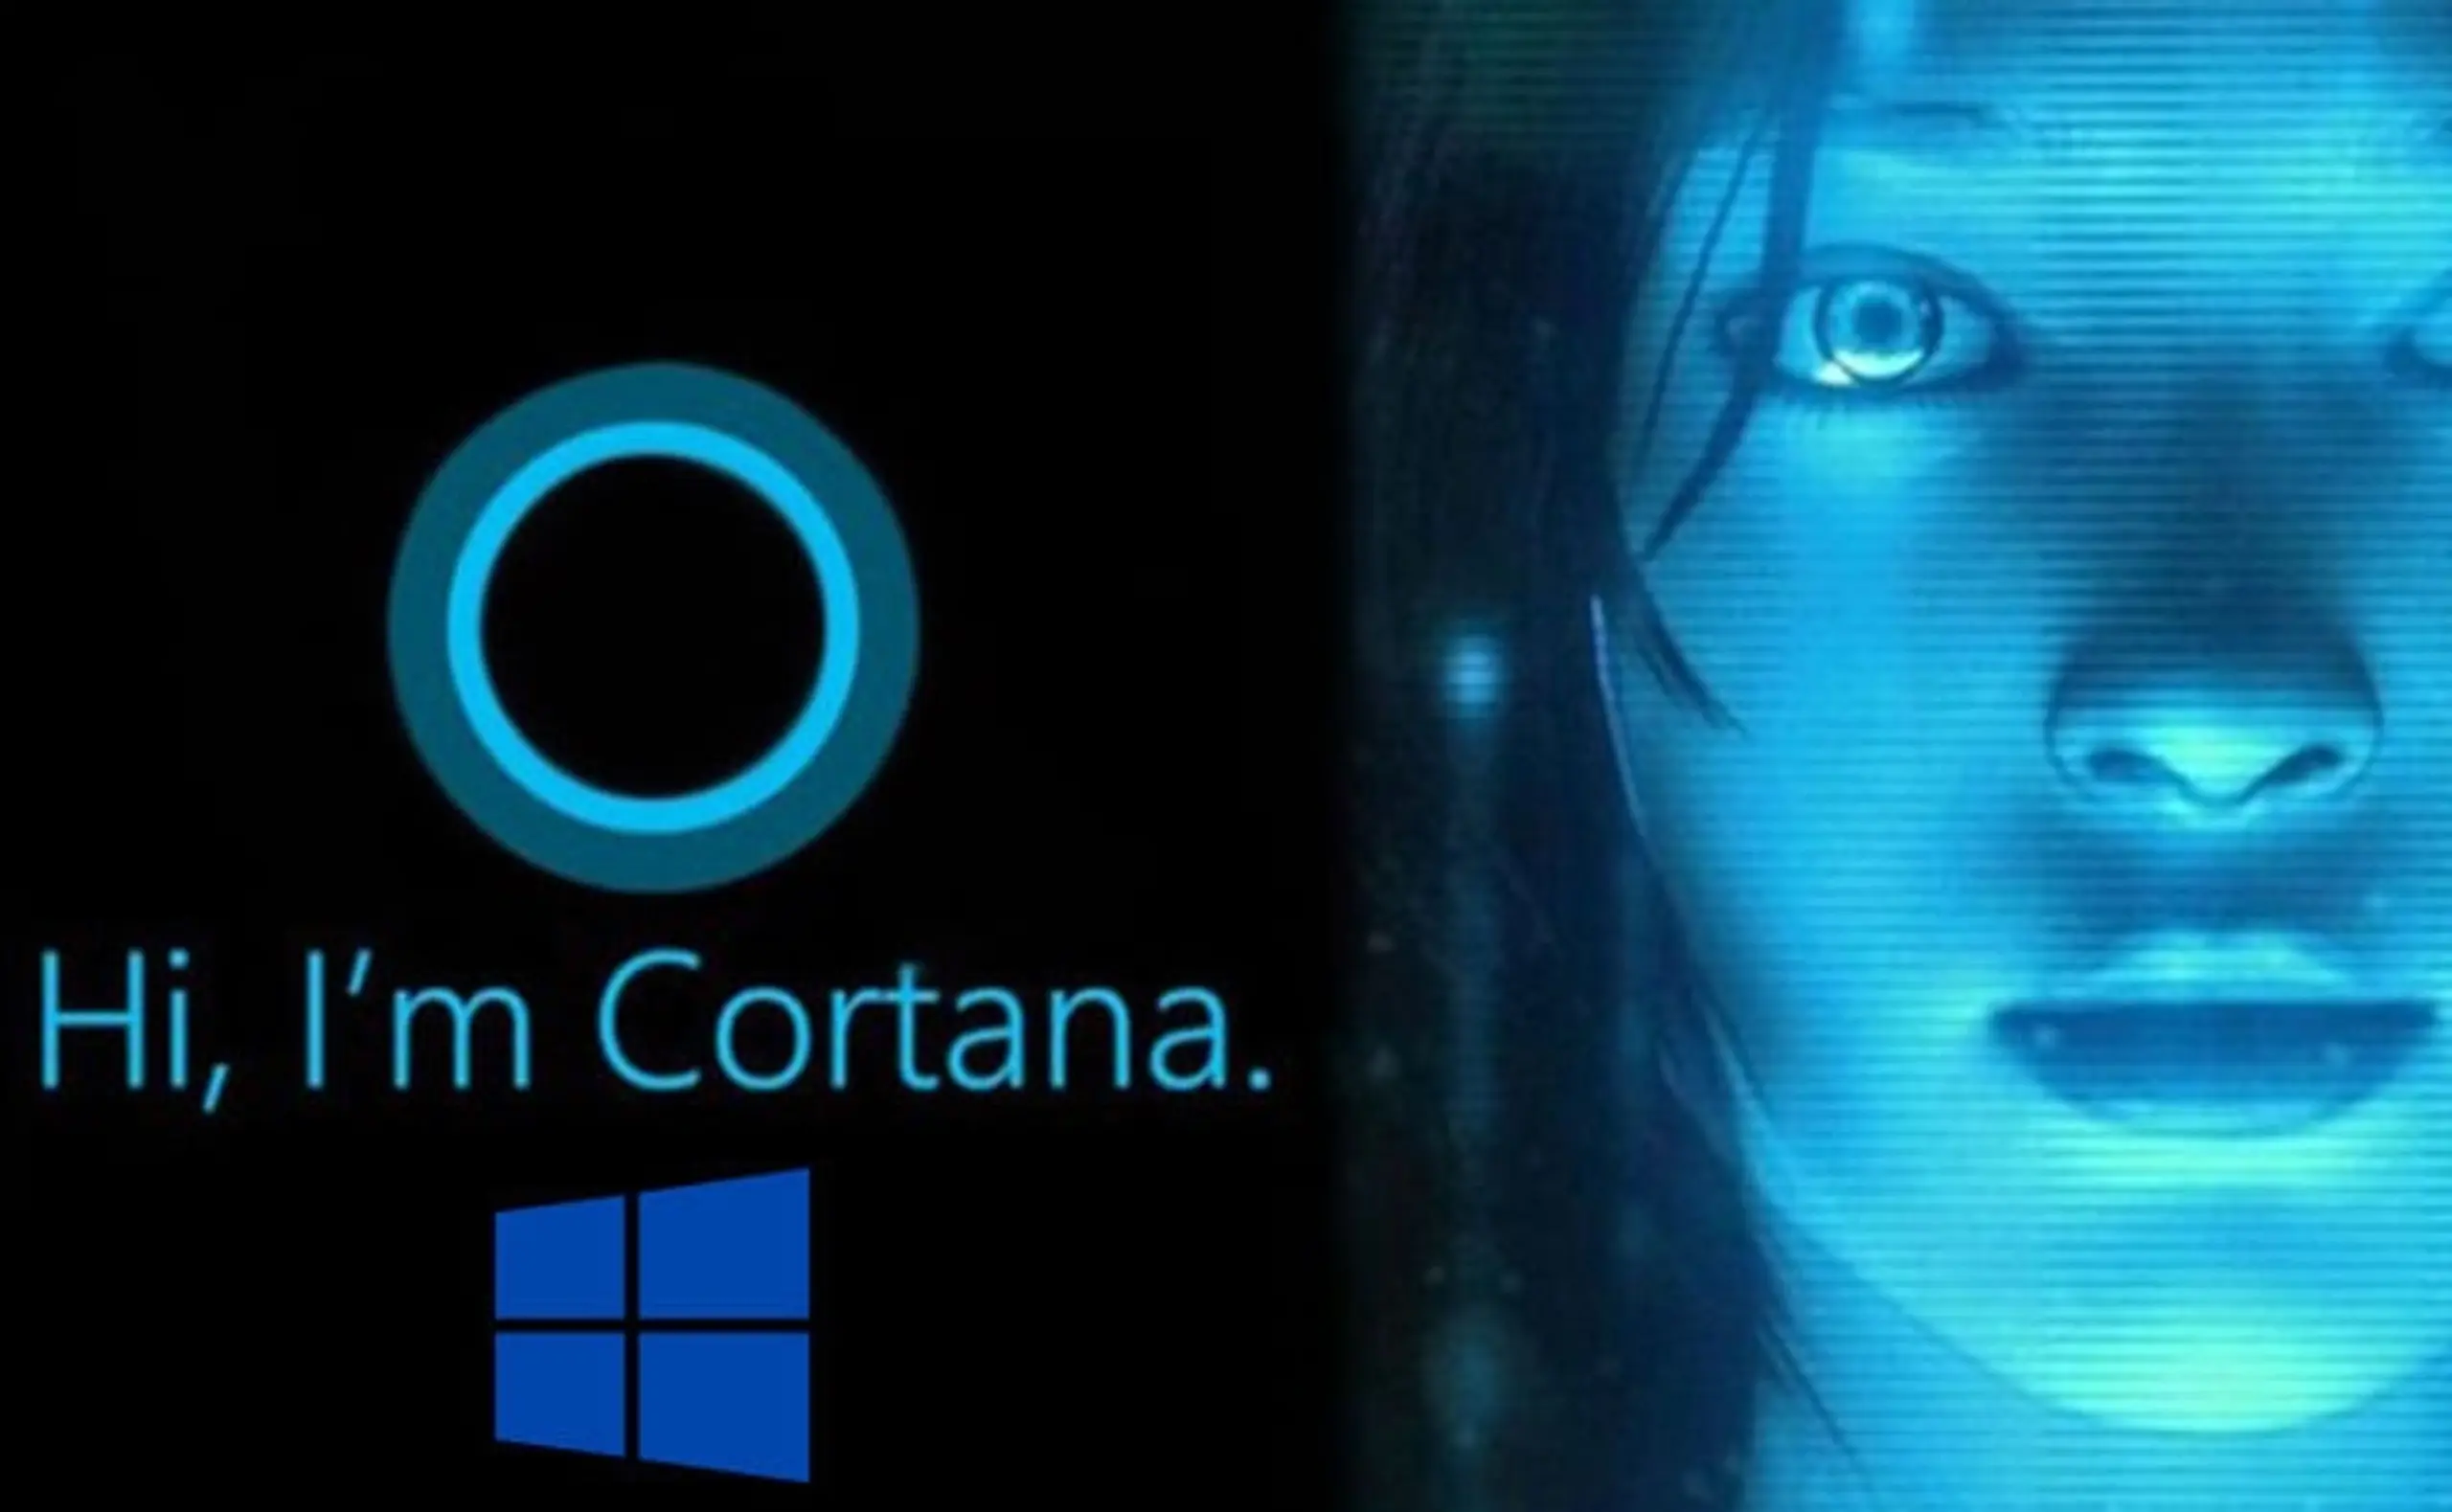 Cortana, die AI-Assistentin von Microsoft